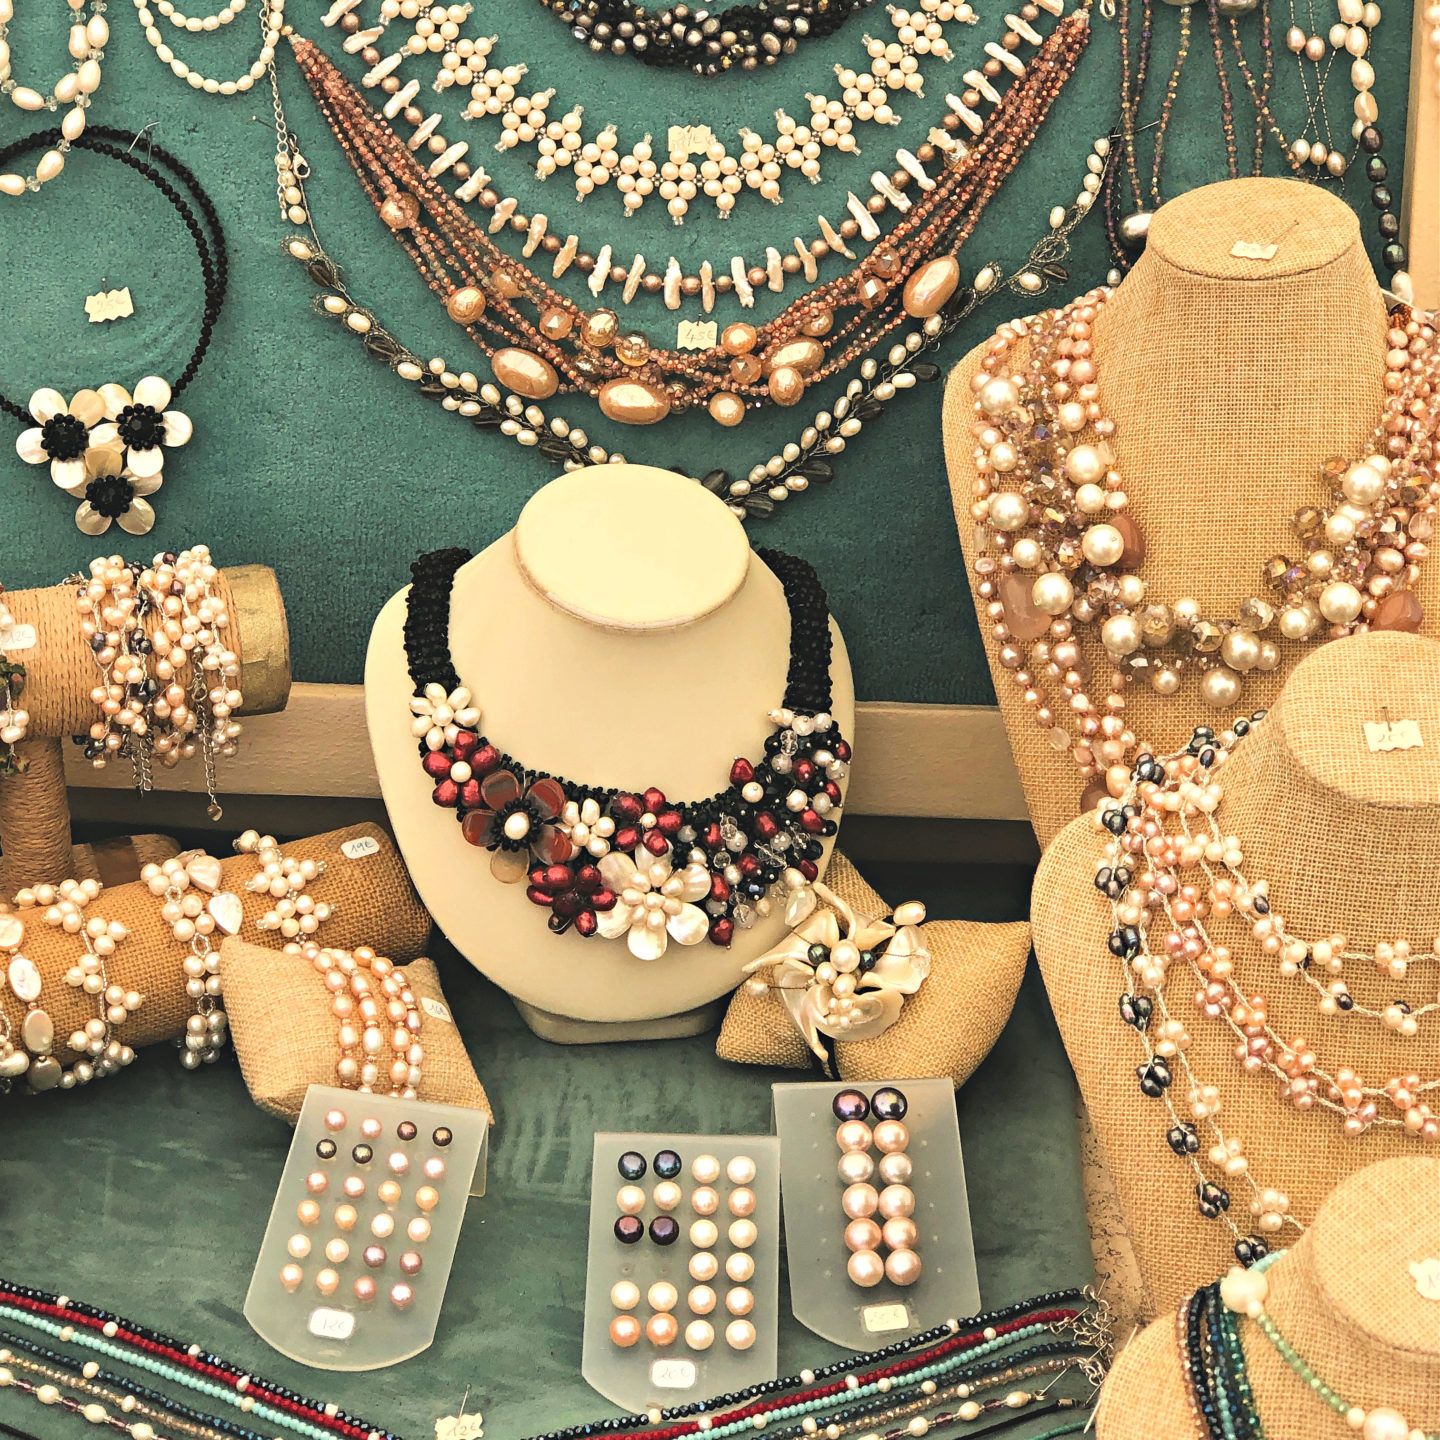 Pearl necklaces in Grimaud market